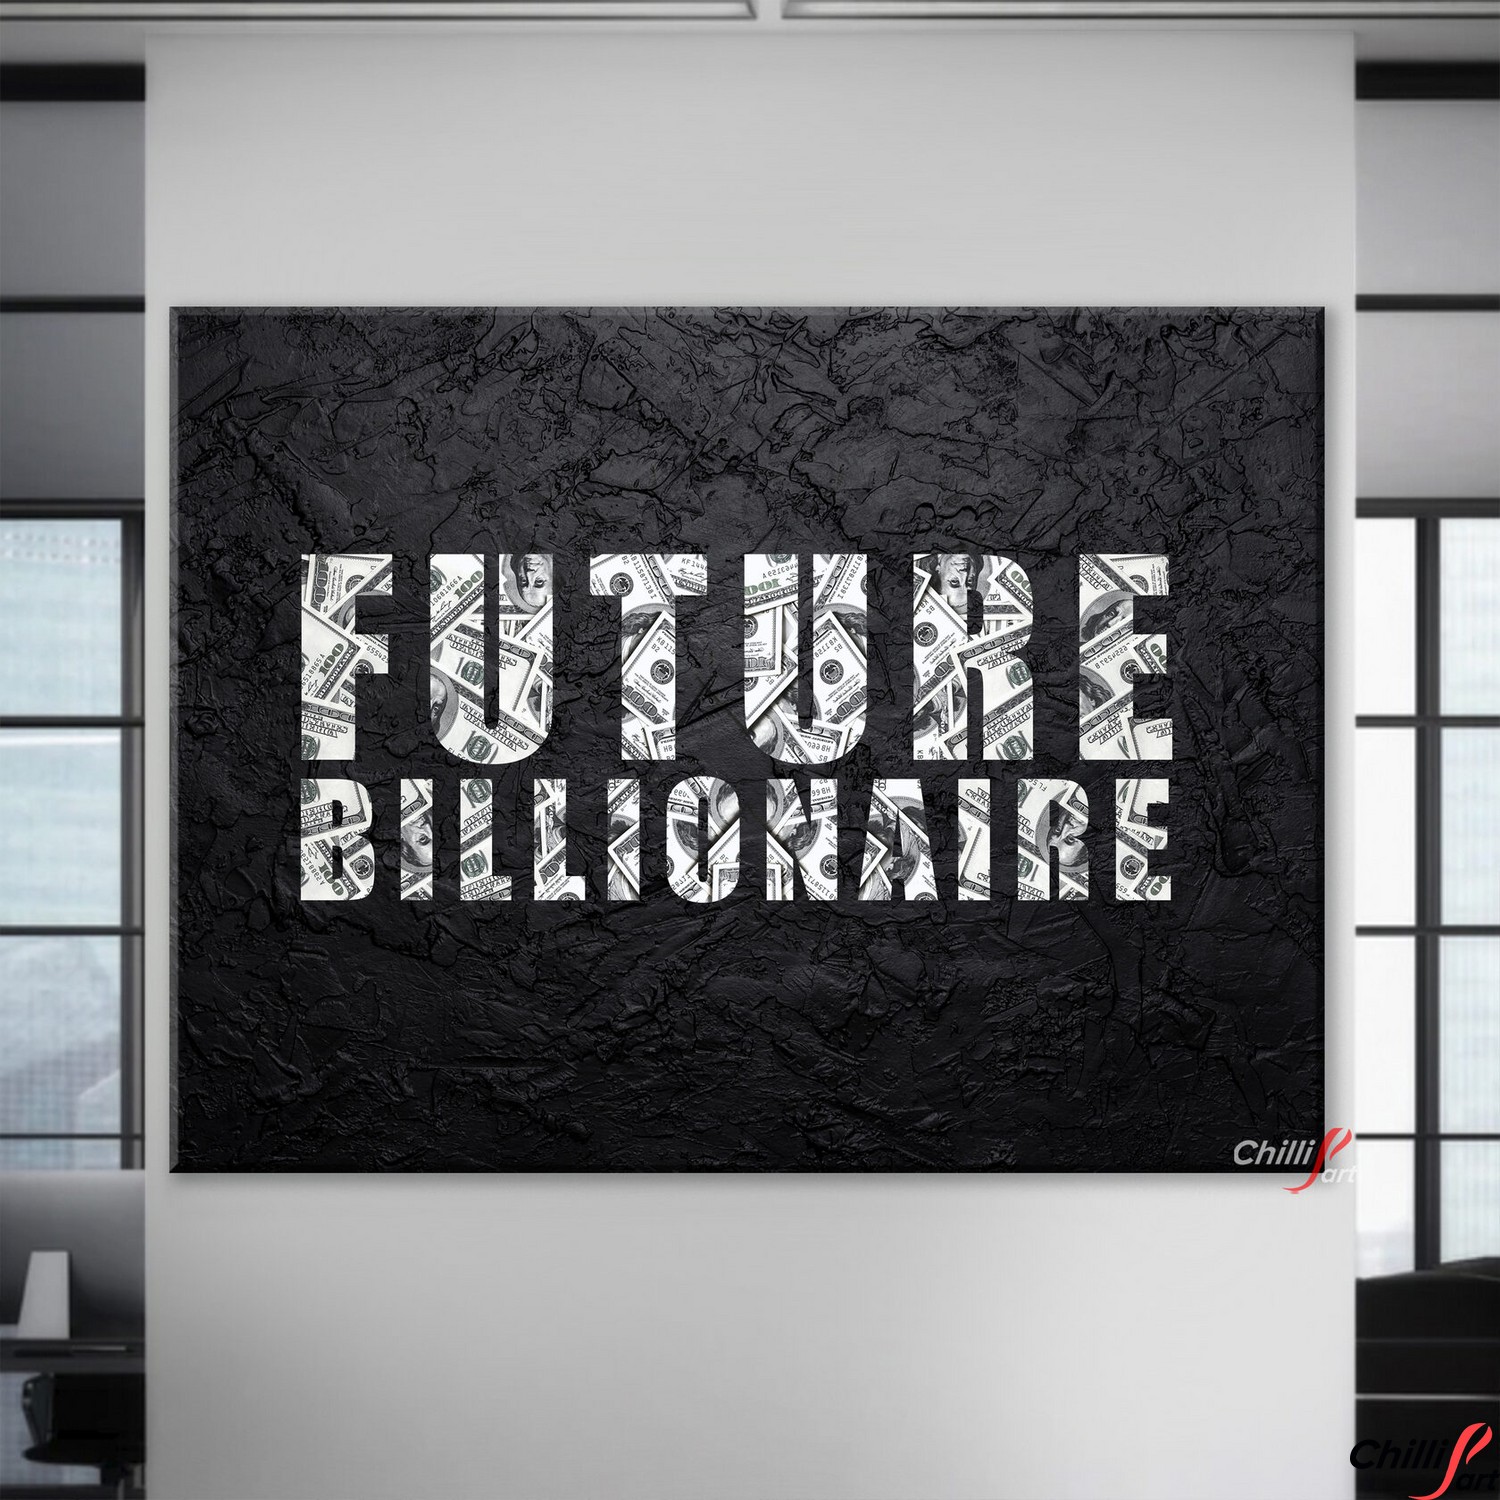 Картина Future Billionaire